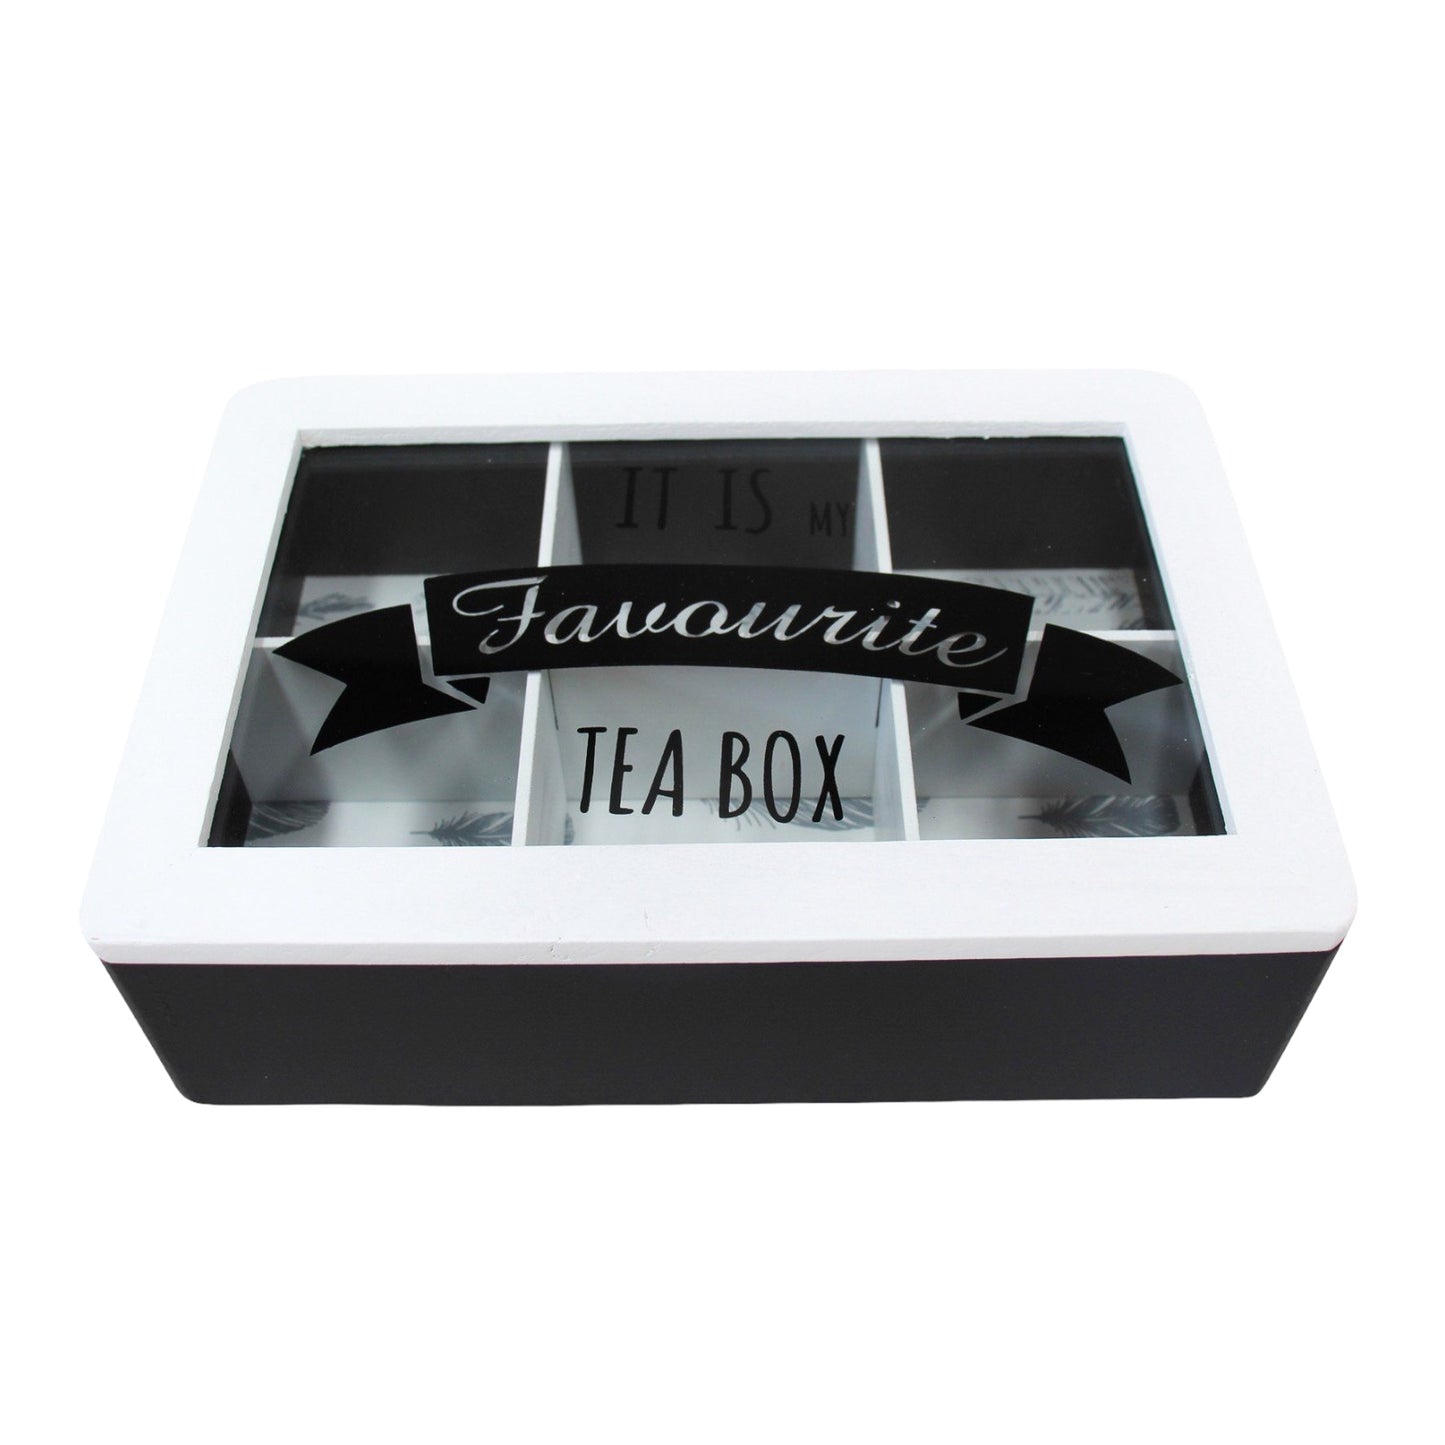 Tea Box Tea Favourites Vintage Black - The Renmy Store Homewares & Gifts 